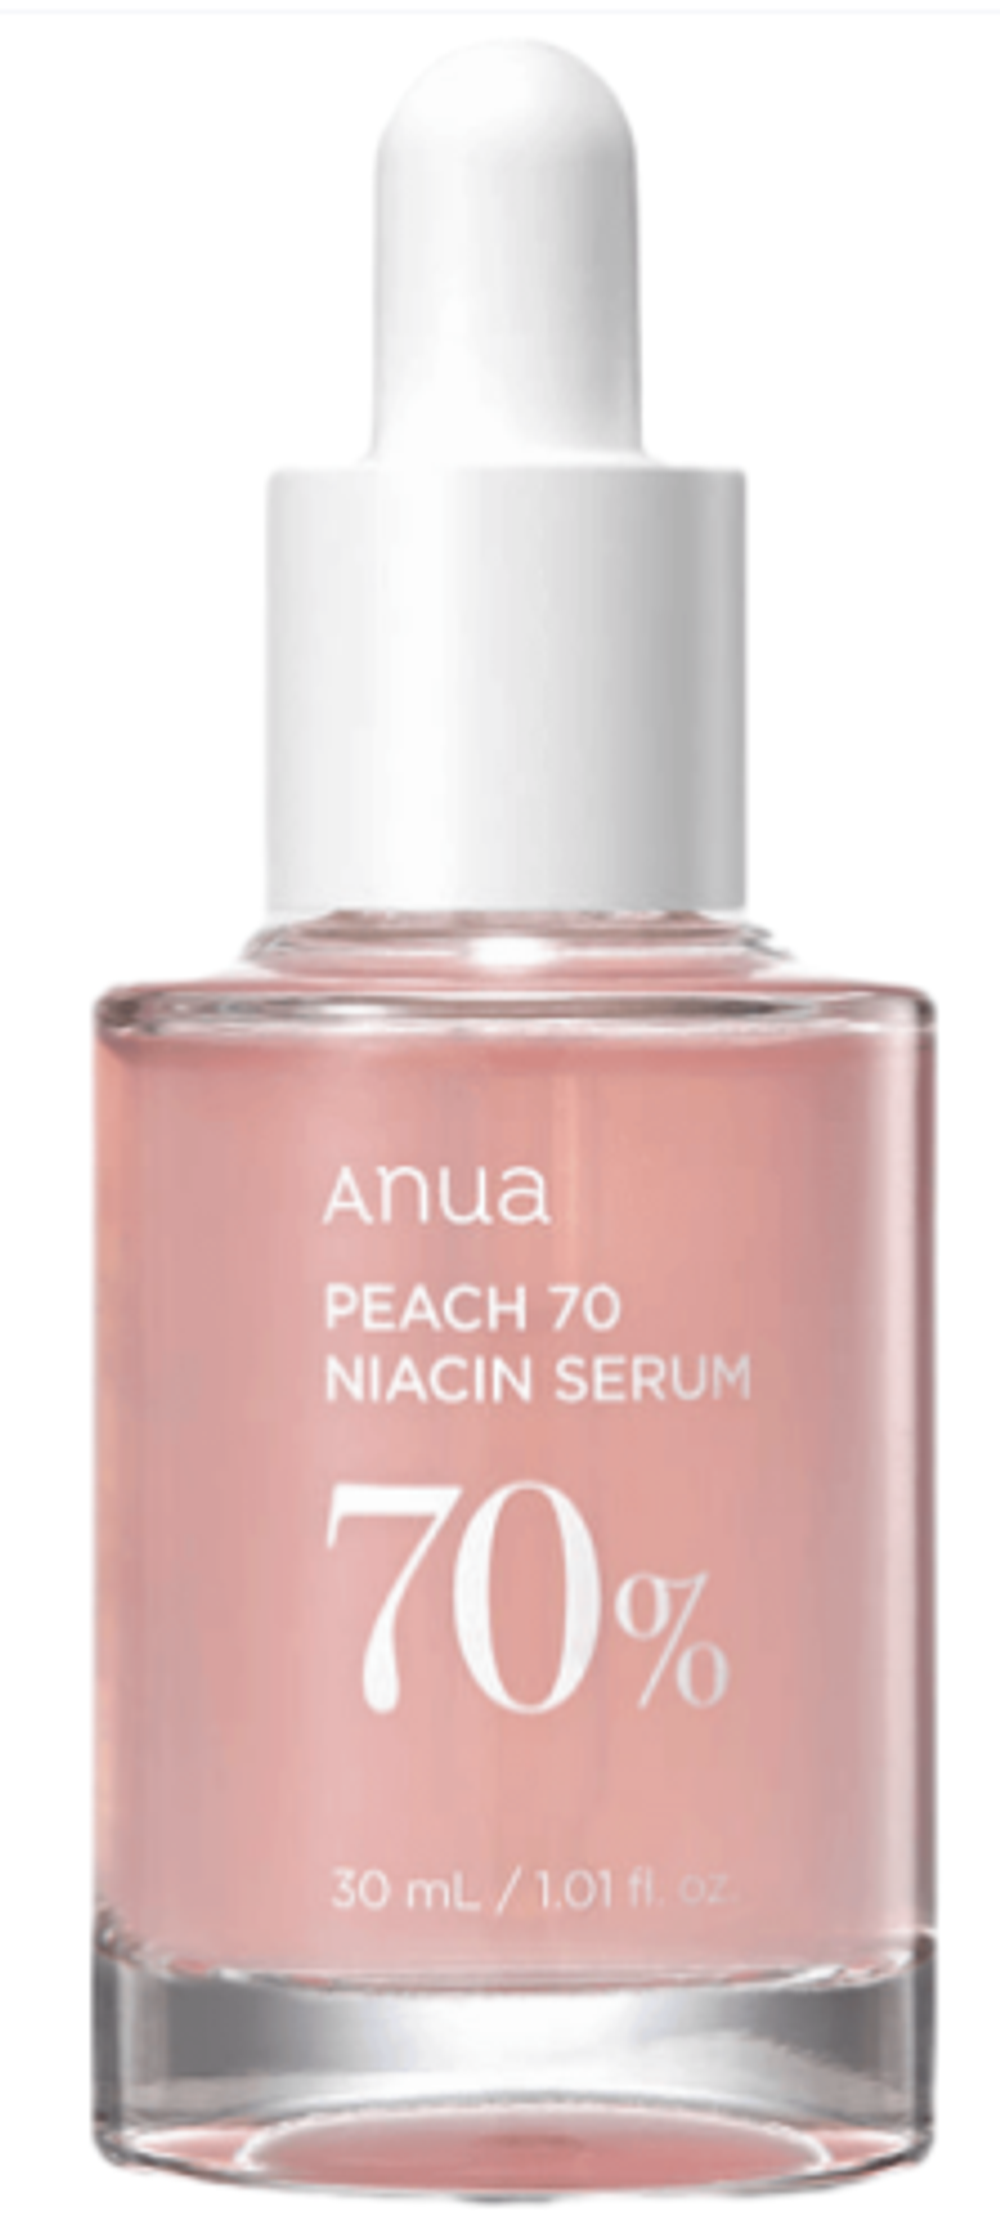 Anua Peach 70% Niacinamide Serum сыворотка для лица 30мл